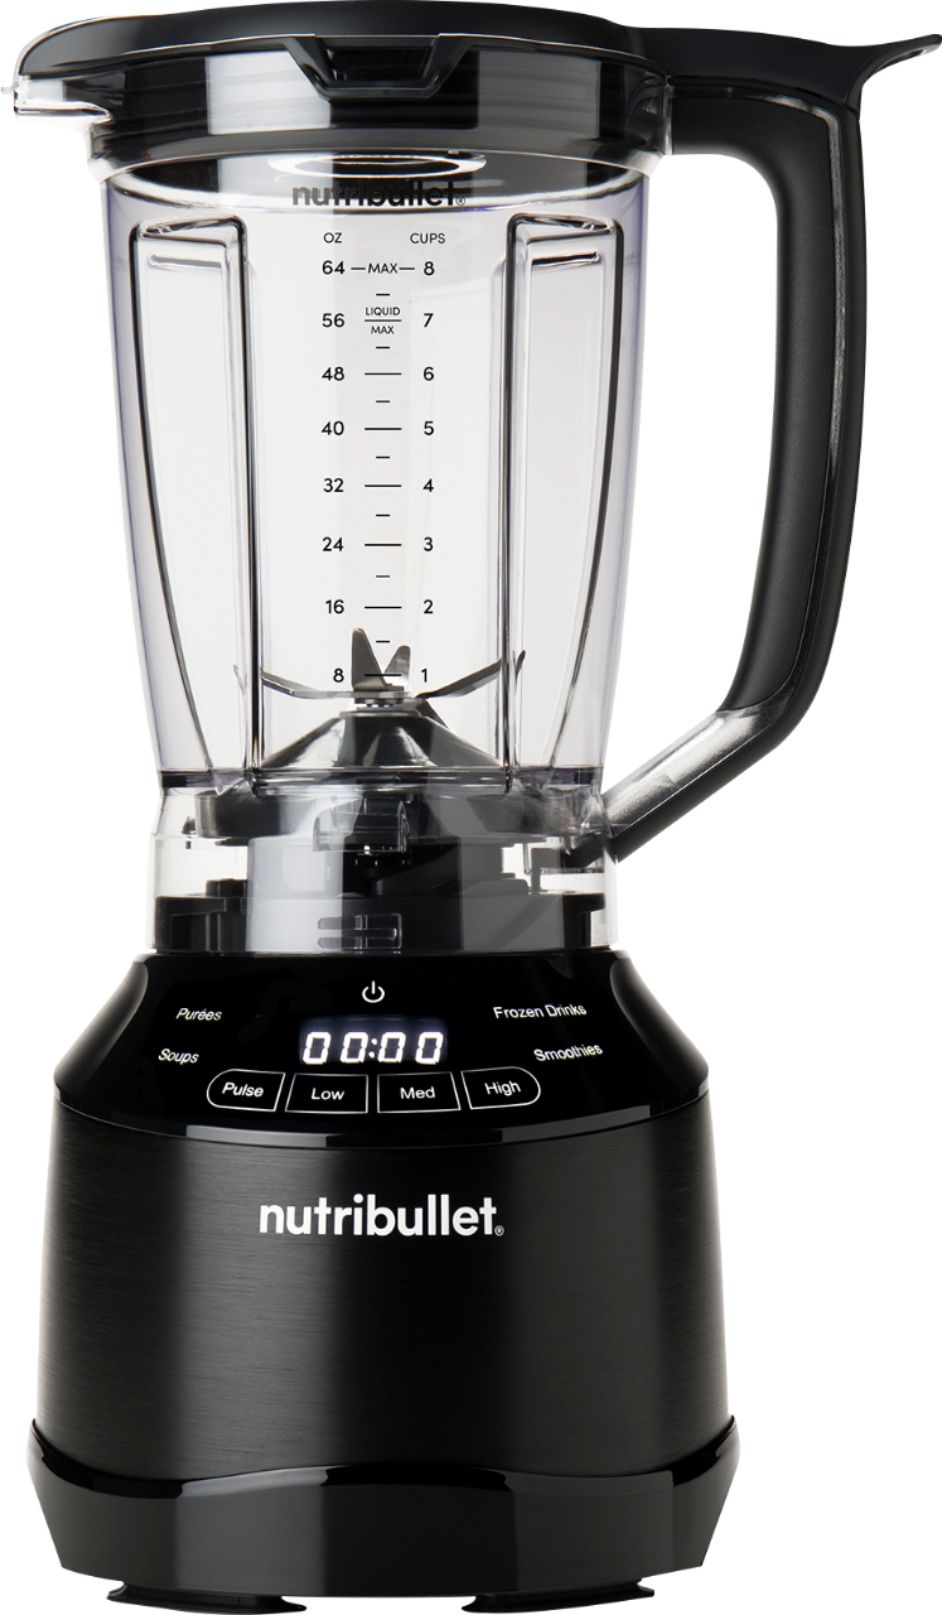 Nutribullet 7c Food Processor - Black